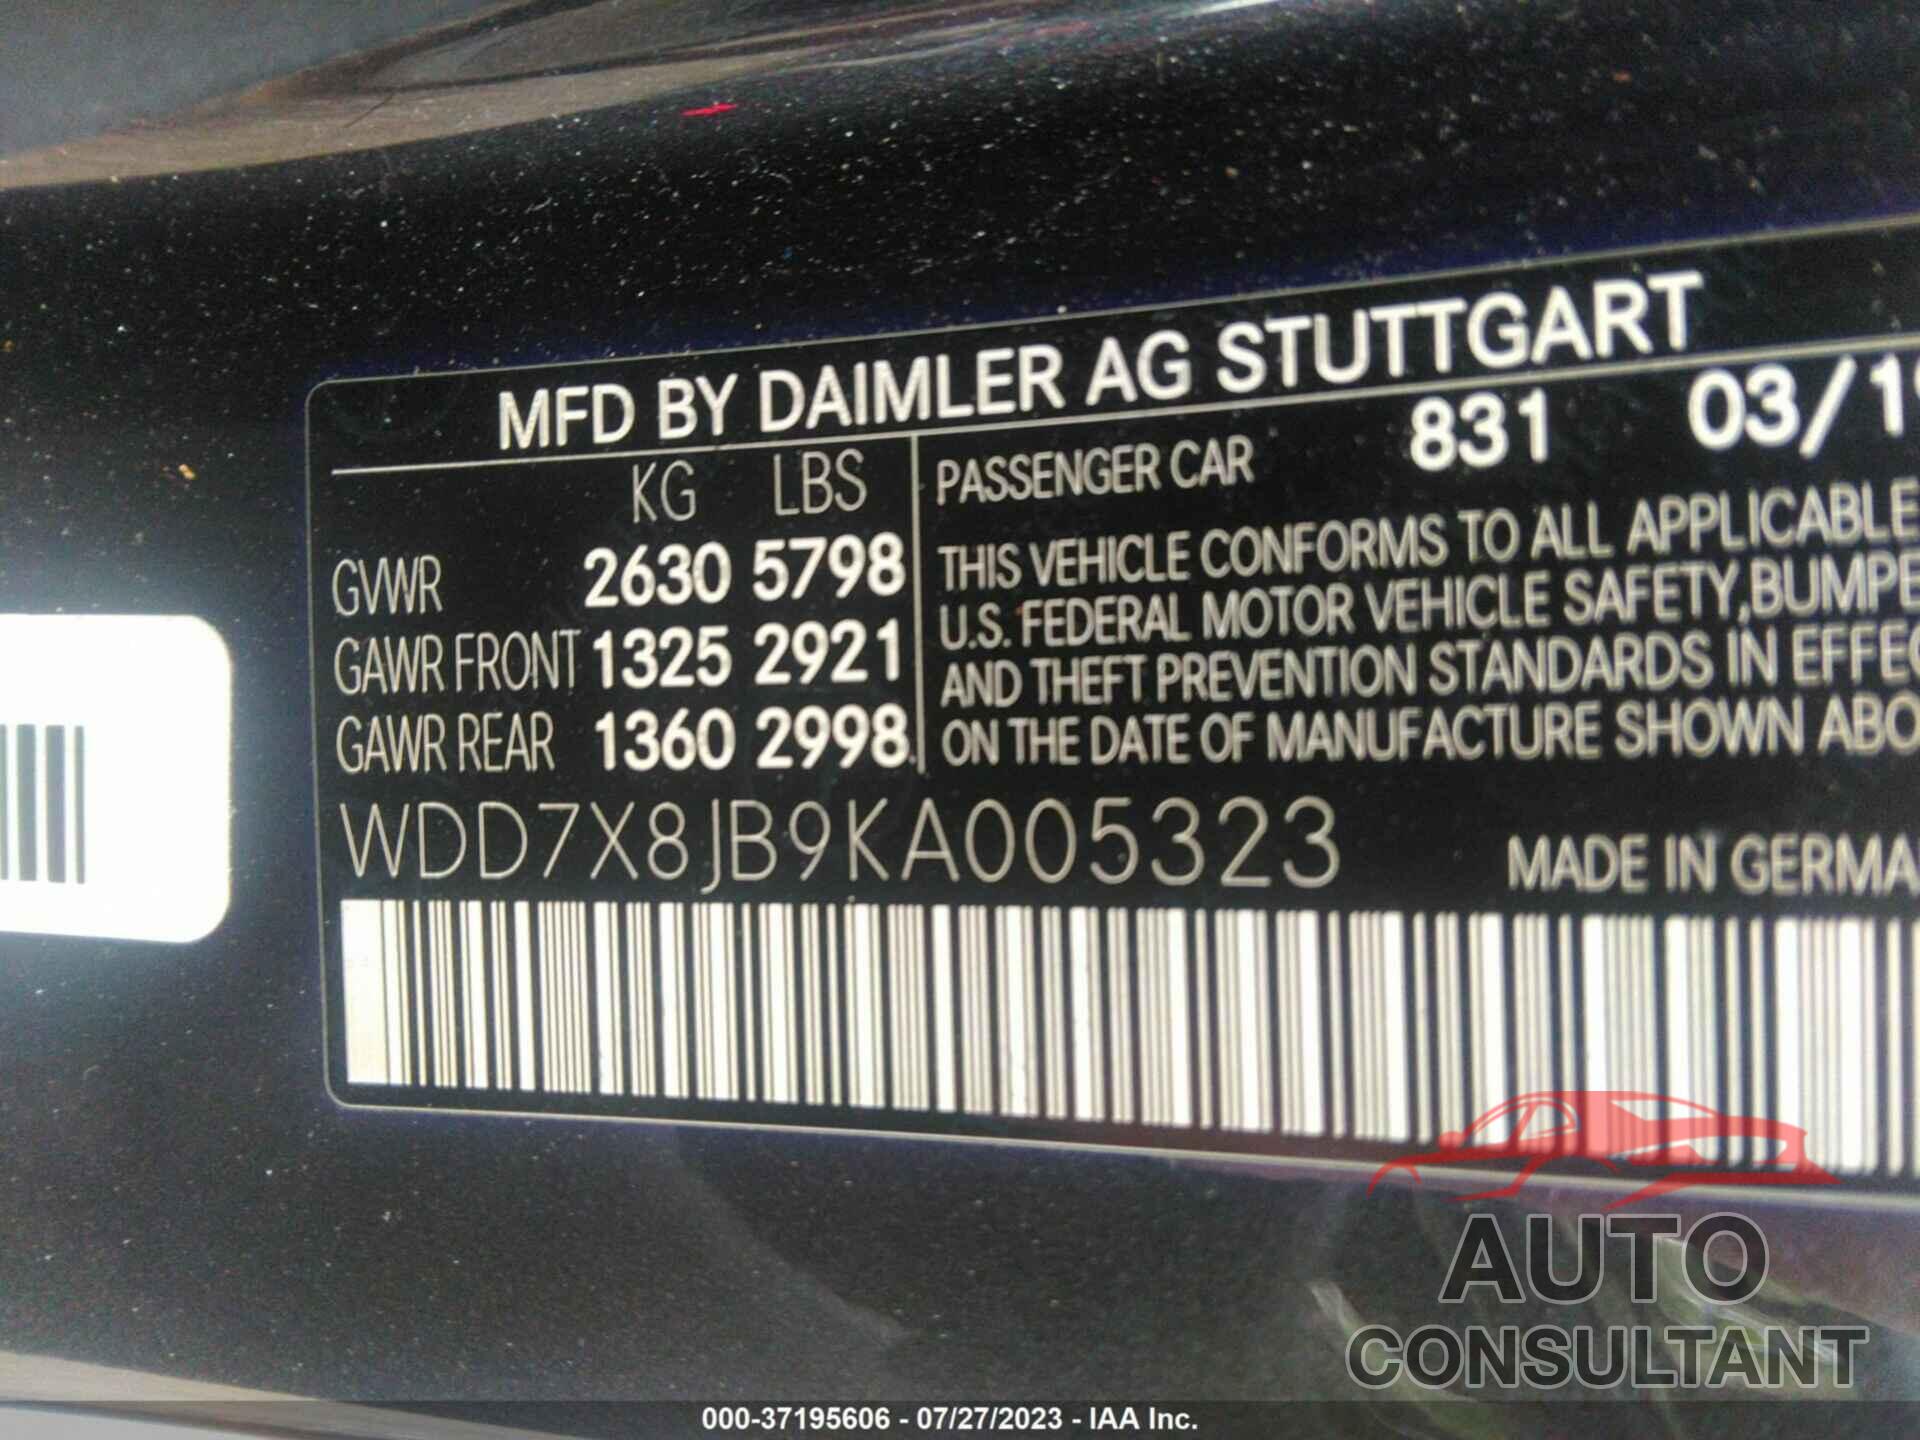 MERCEDES-BENZ AMG GT 2019 - WDD7X8JB9KA005323